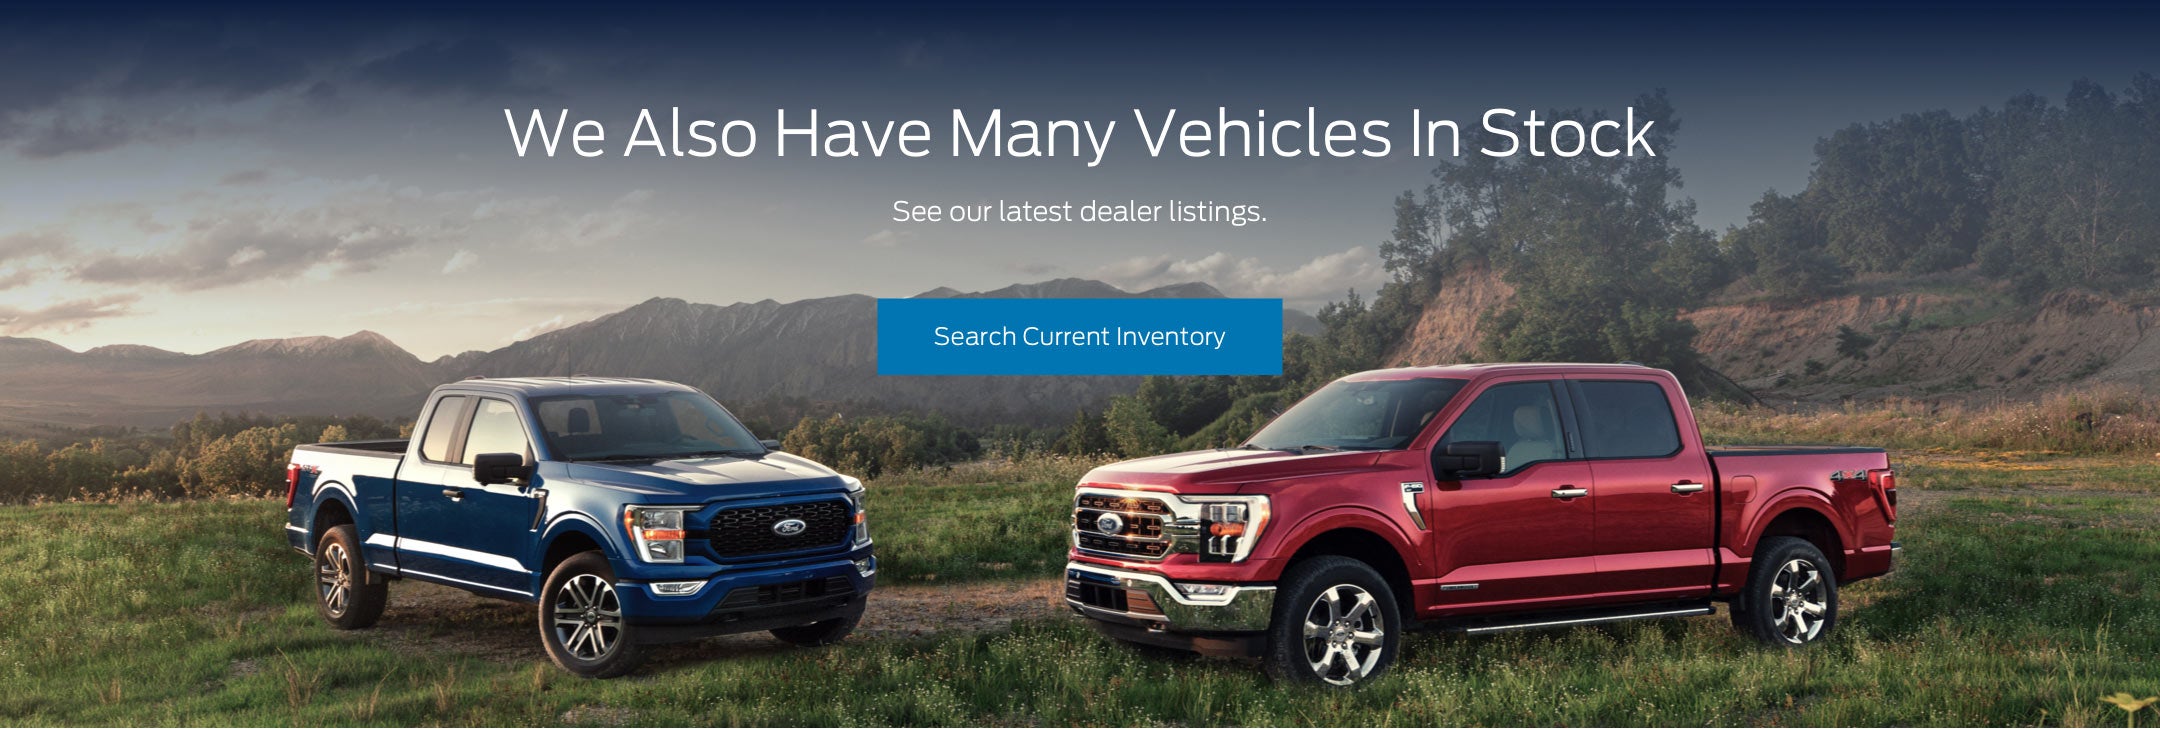 Ford vehicles in stock | Granger Ford in Granger IA